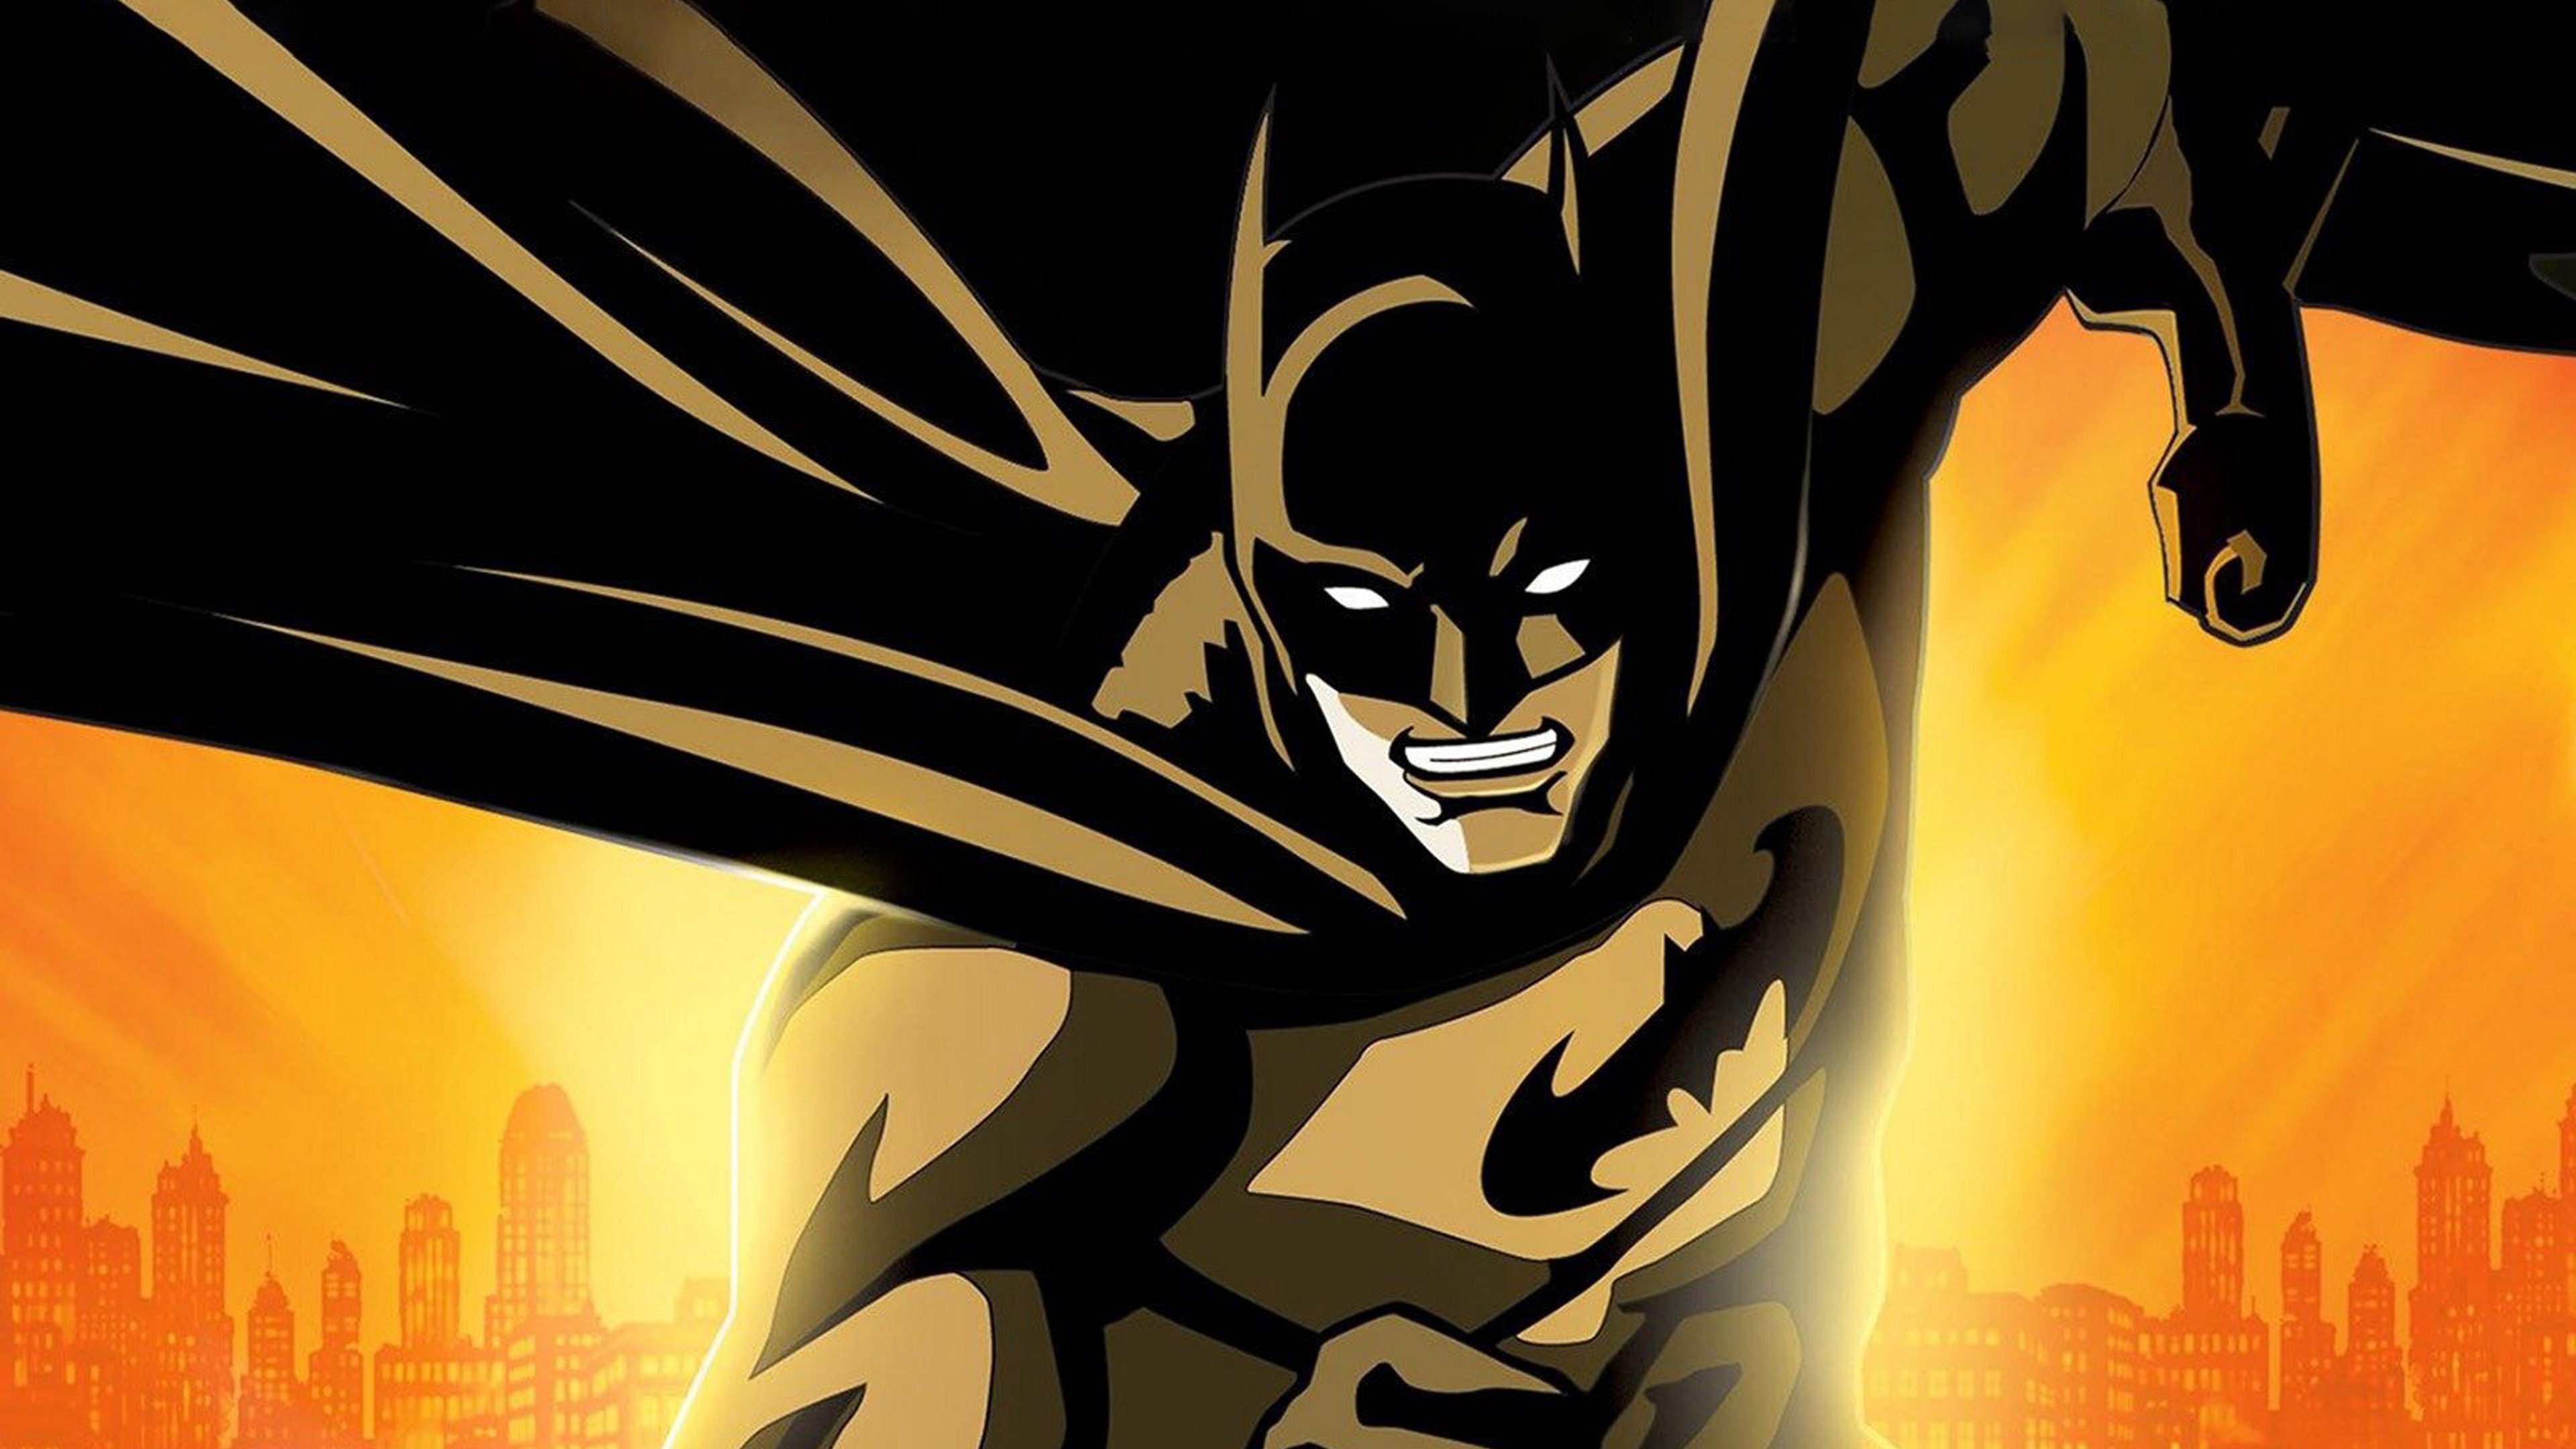 The Dark Knight - “Batman: Gotham Knight” Novelisation coming